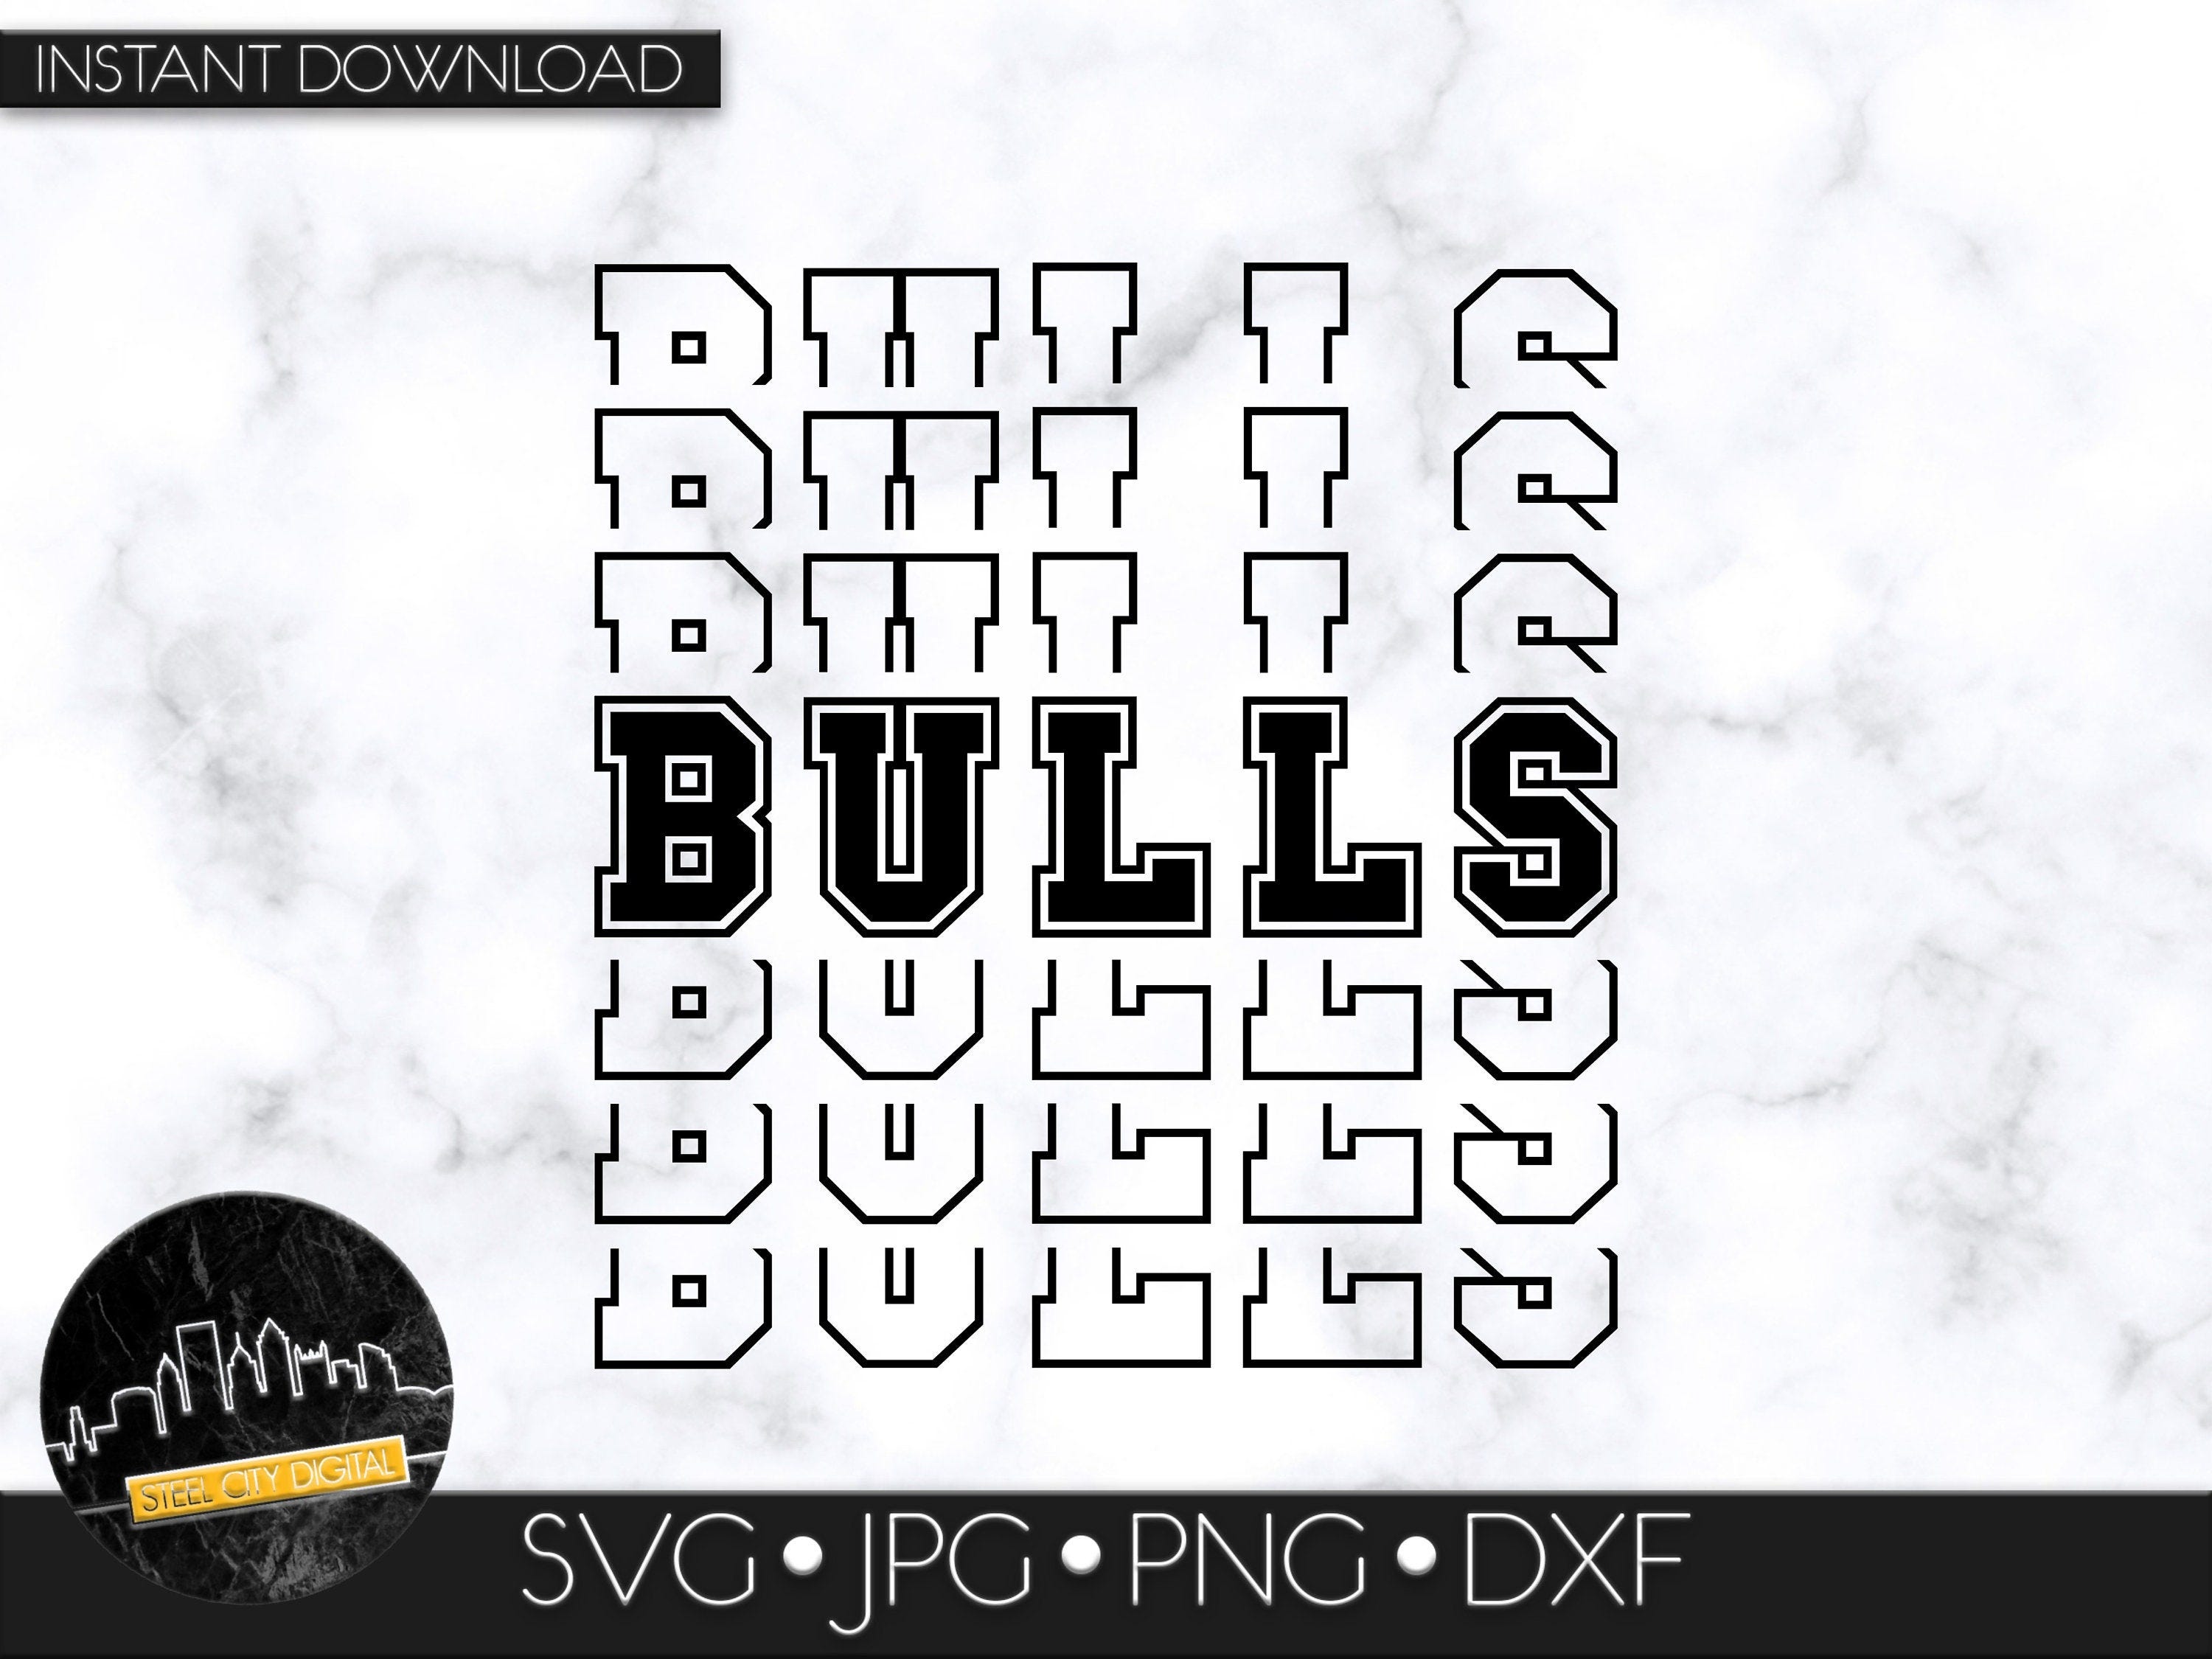 Bulls SVG Digital Download, SVG Cut File, SVG for Cricut or Silhouette, School Spirit svg, Team Mascot